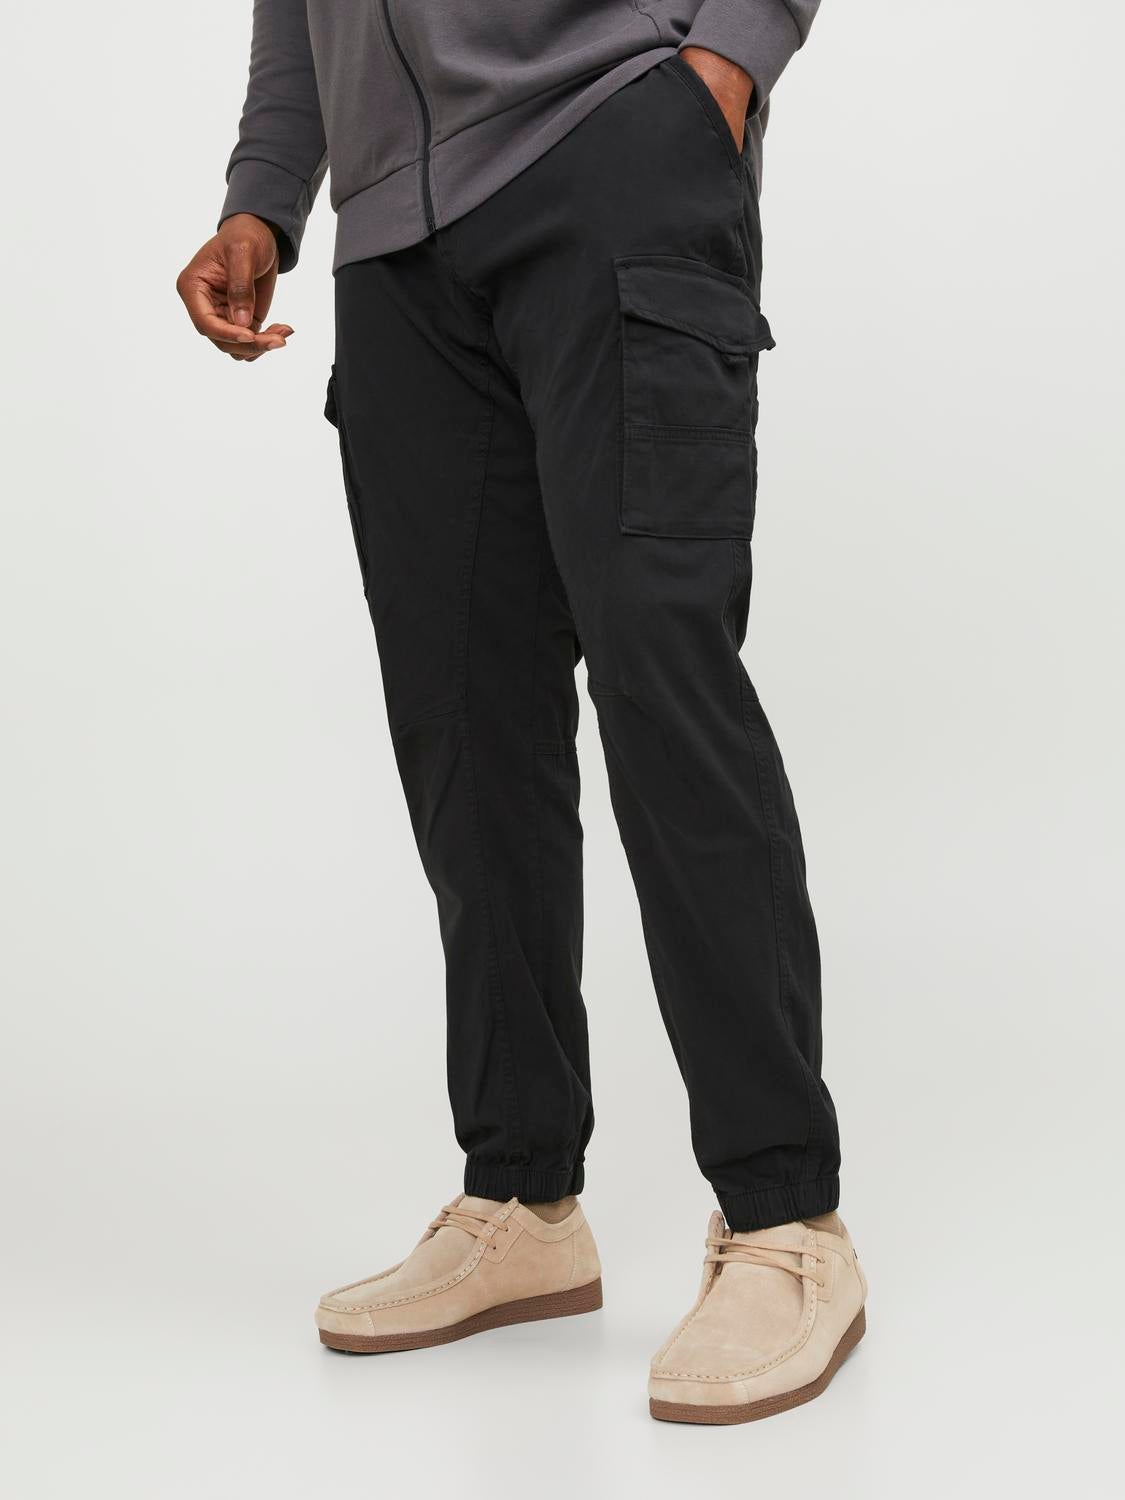 Apt 9 Mens Slim fit Black Dress Pants Size 36/29 - beyond exchange